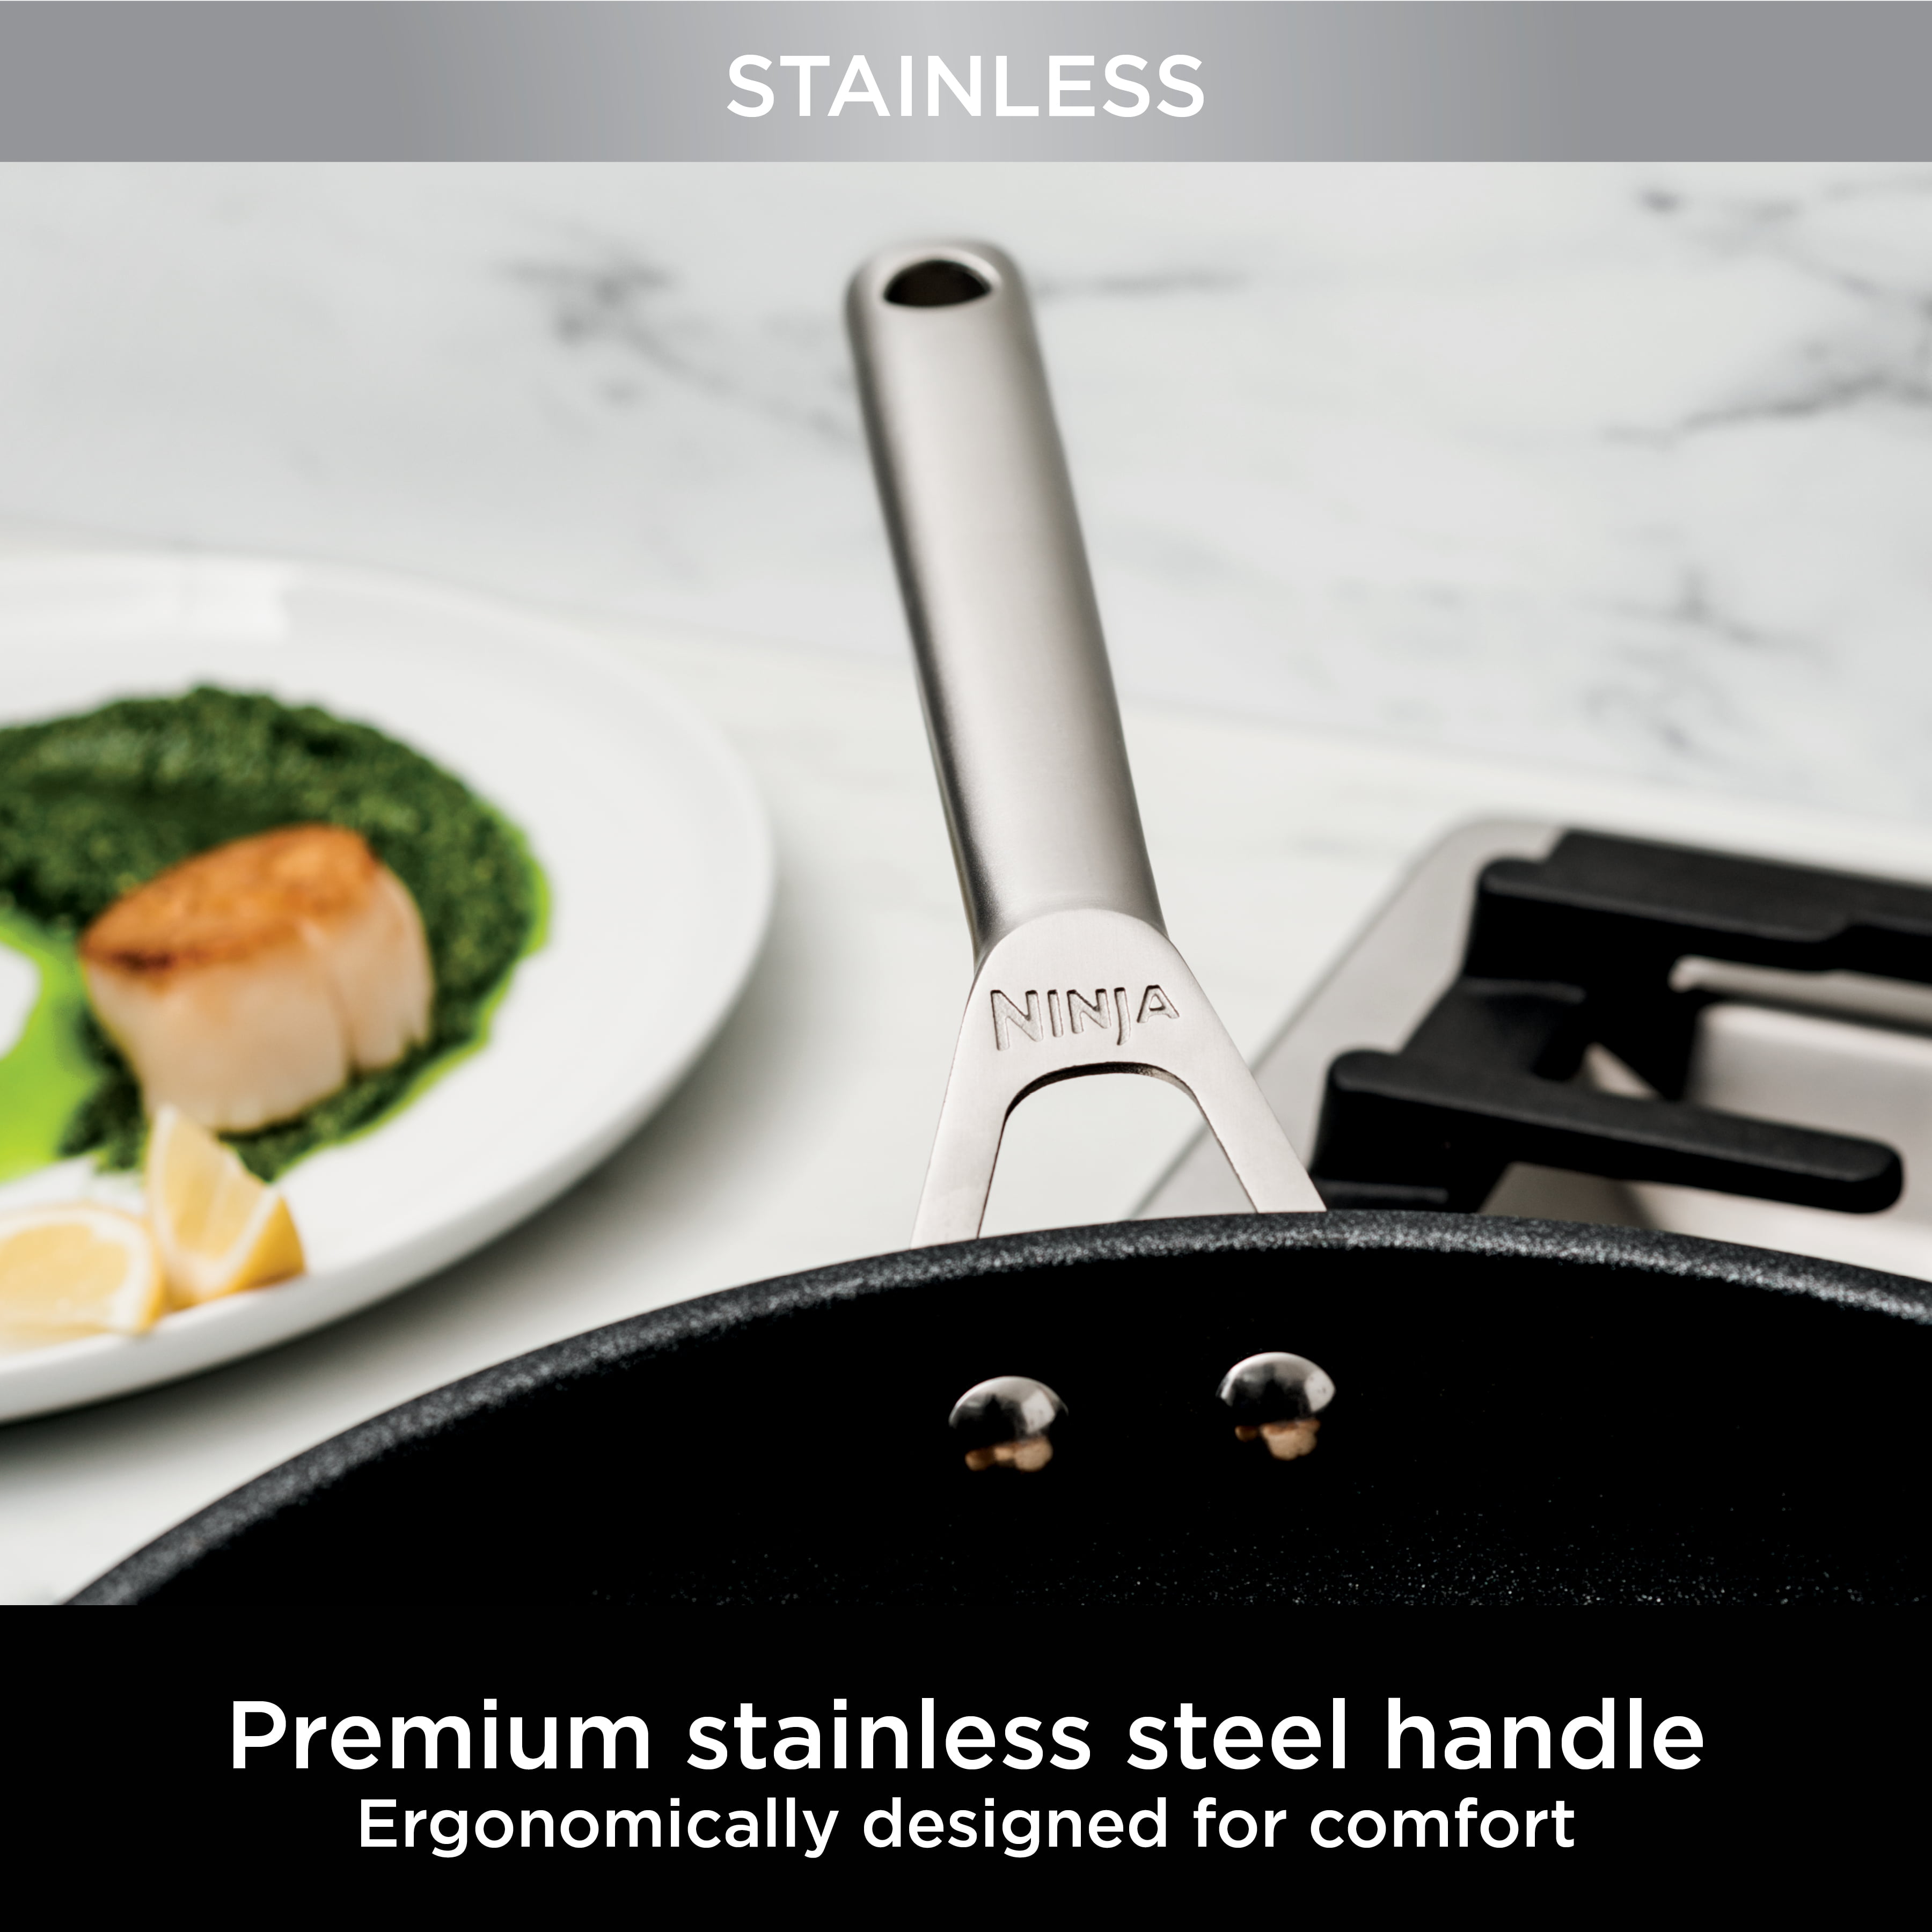 Ninja™ Foodi™ NeverStick® Stainless 10-Piece Cookware Set